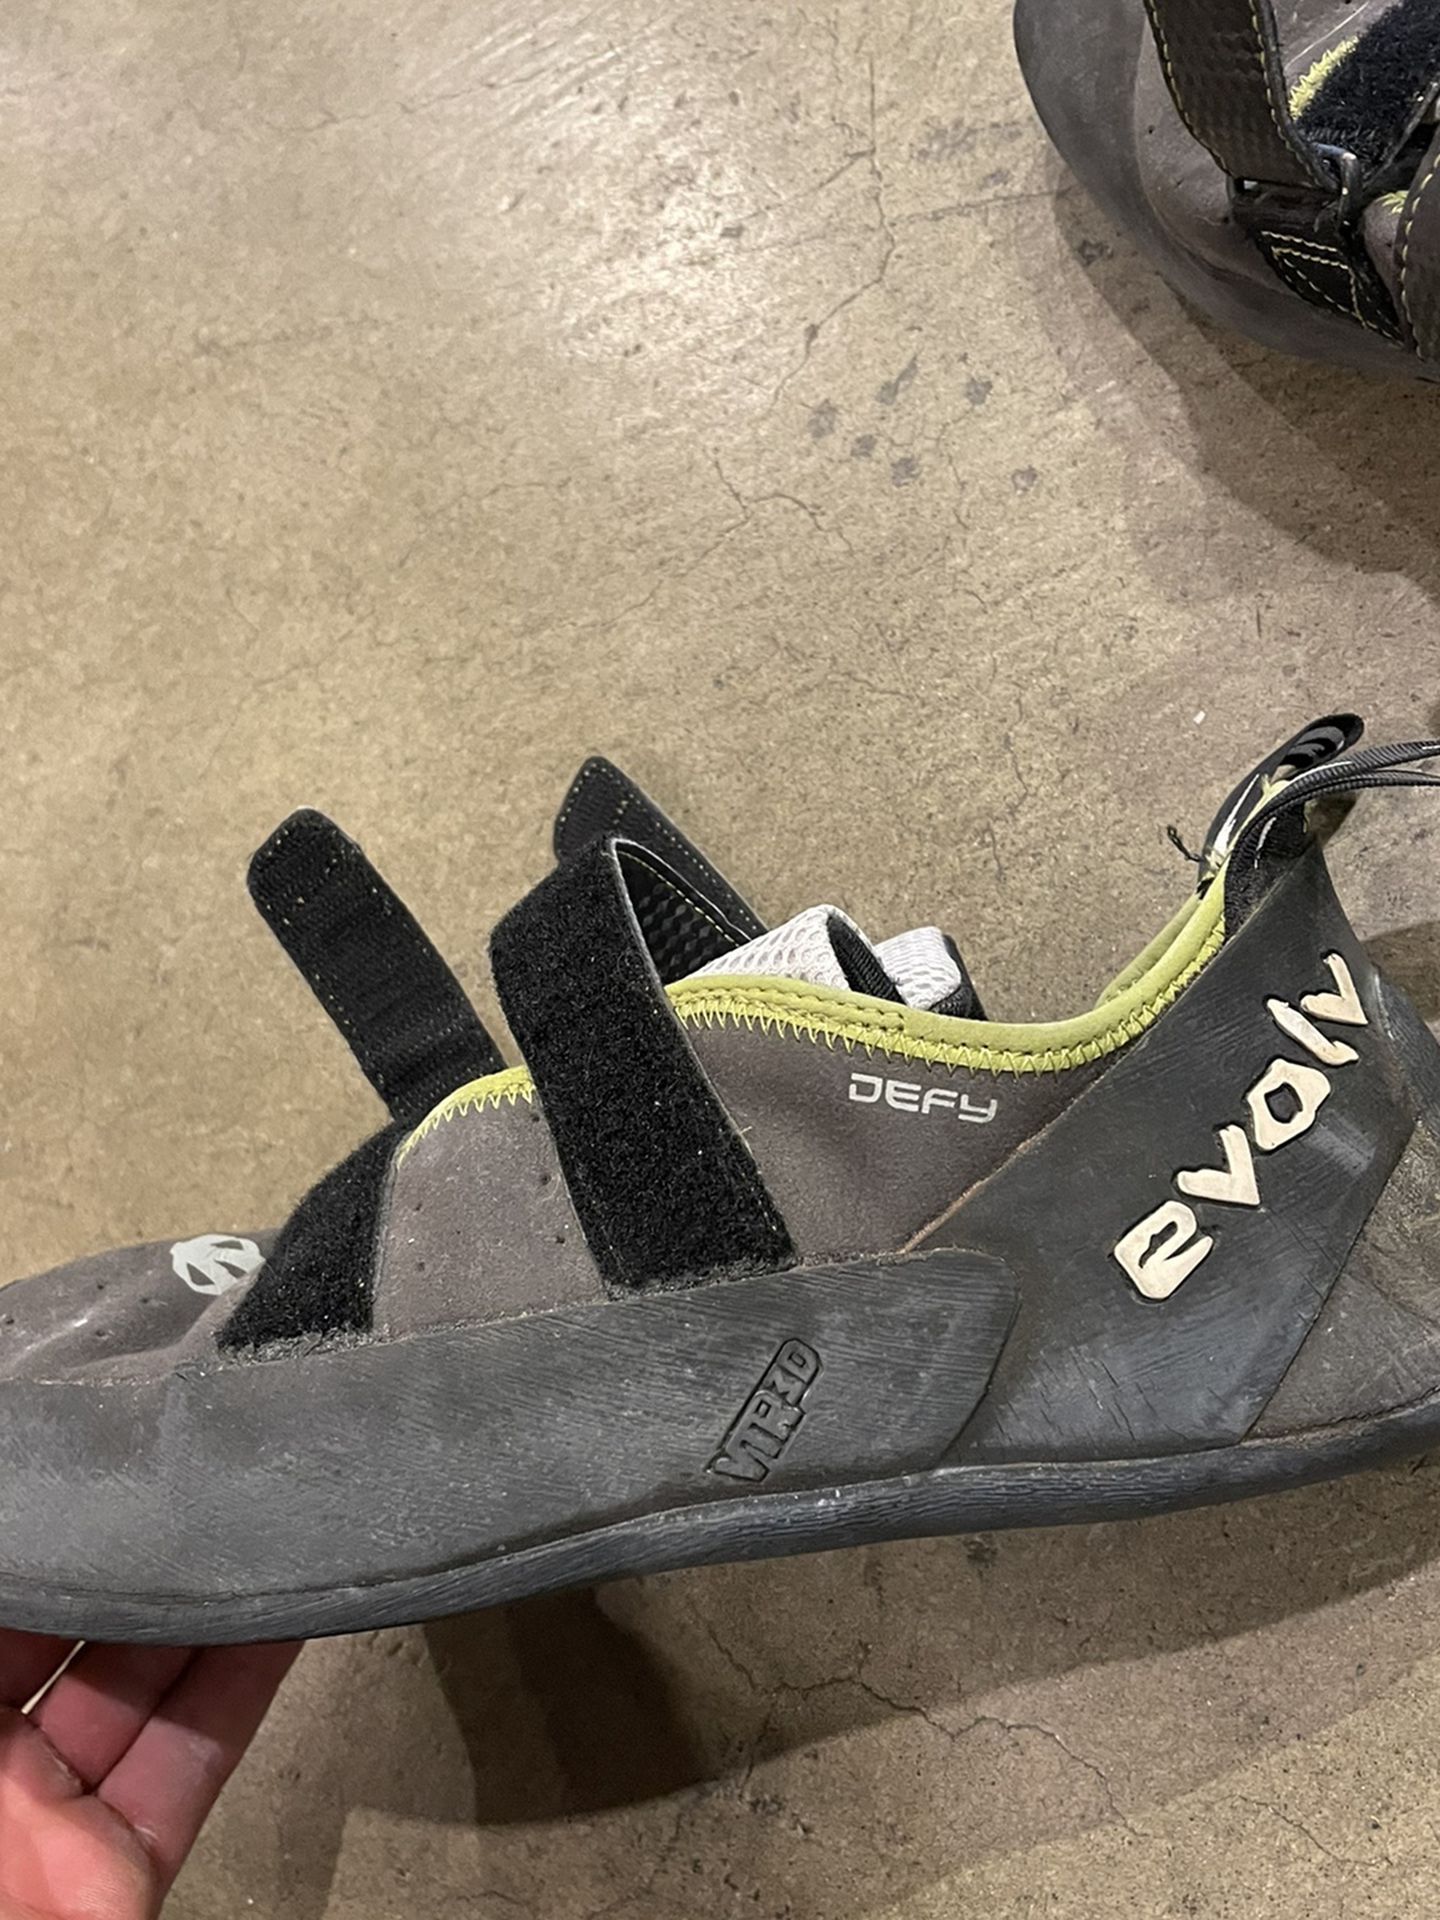 Men’s Size 13 Climbing Shoe Used